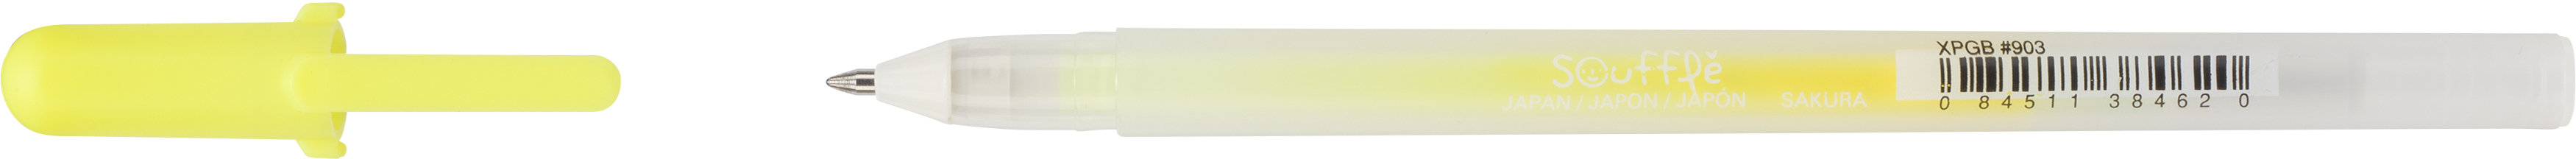 SAKURA Gelly Roll 0.7mm XPGB903 Soufflé gelb Soufflé gelb